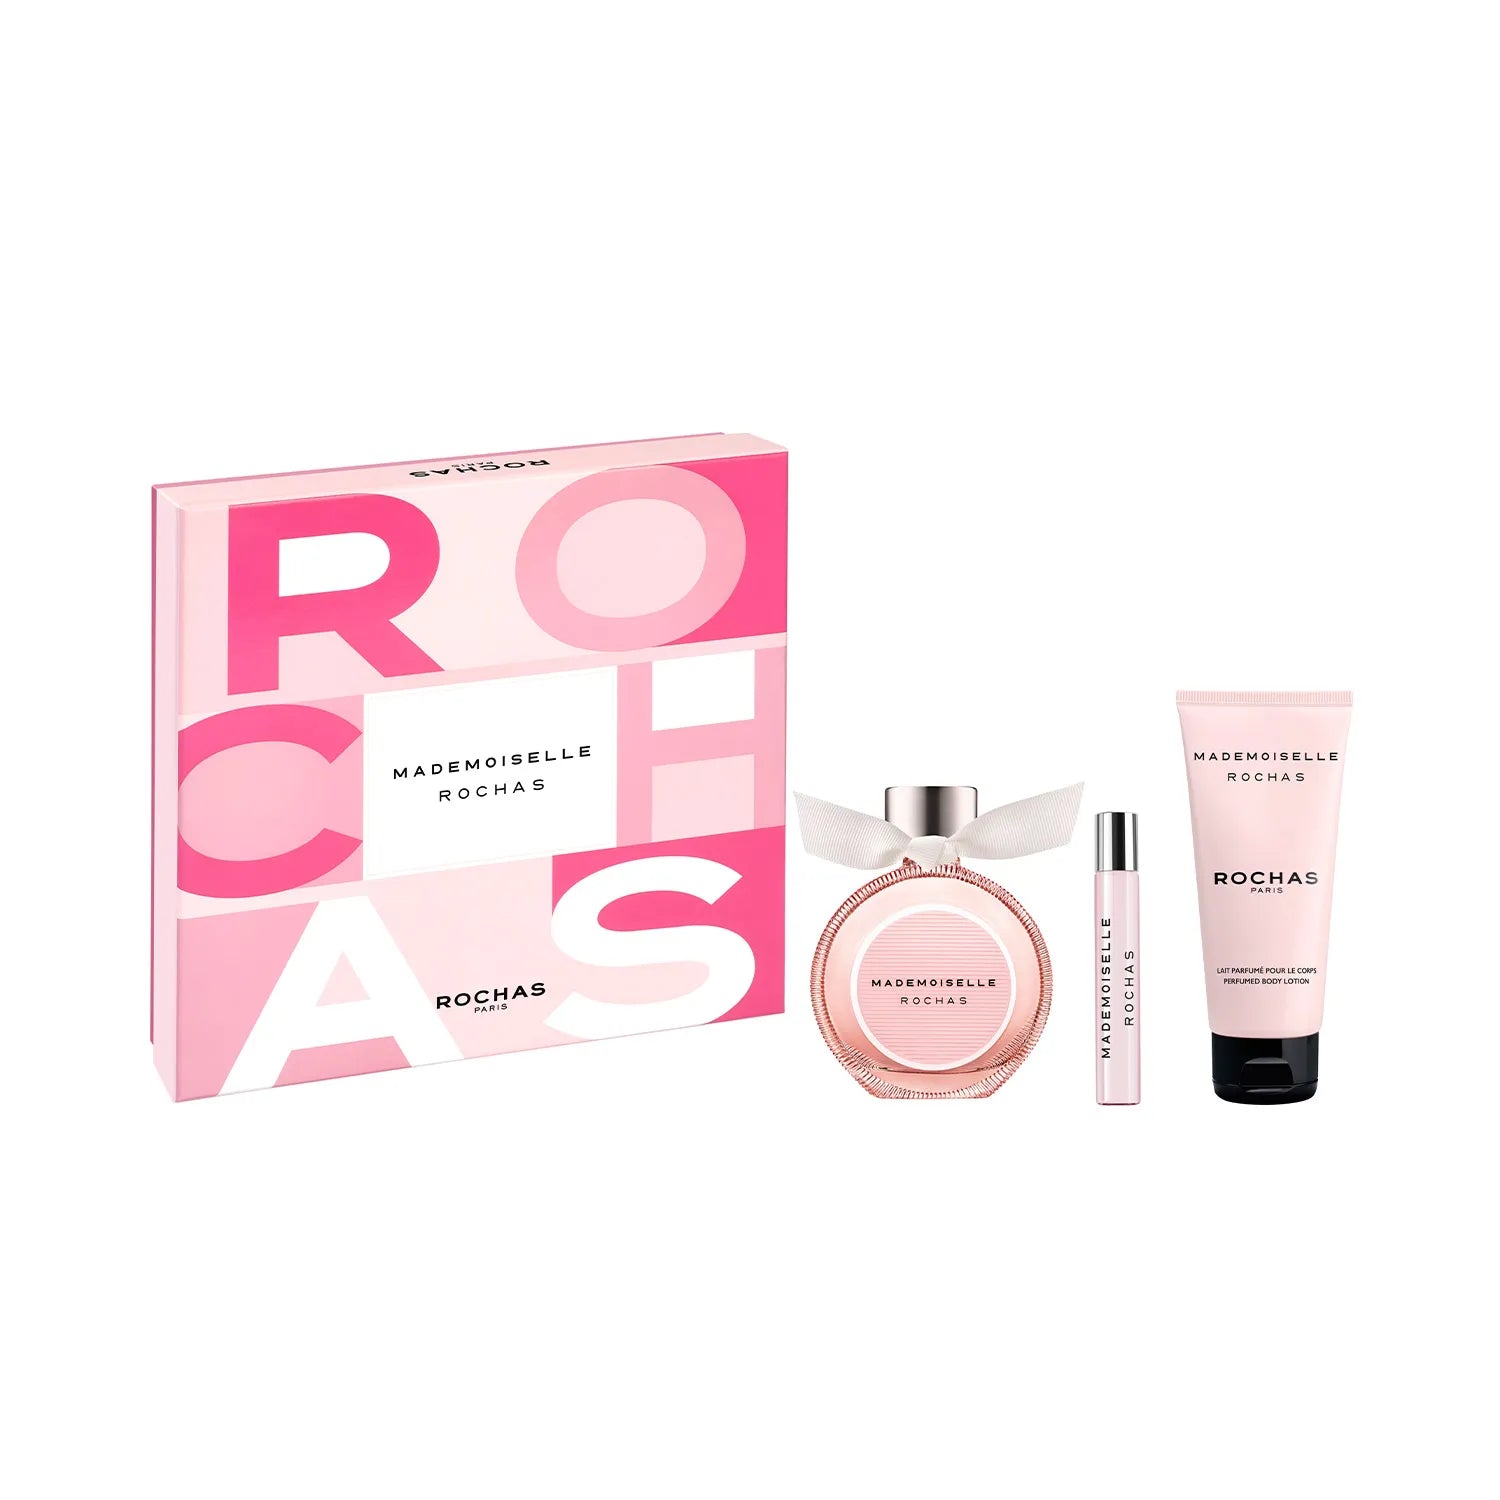 Rochas Mademoiselle Rochas EDP Body Set | My Perfume Shop Australia